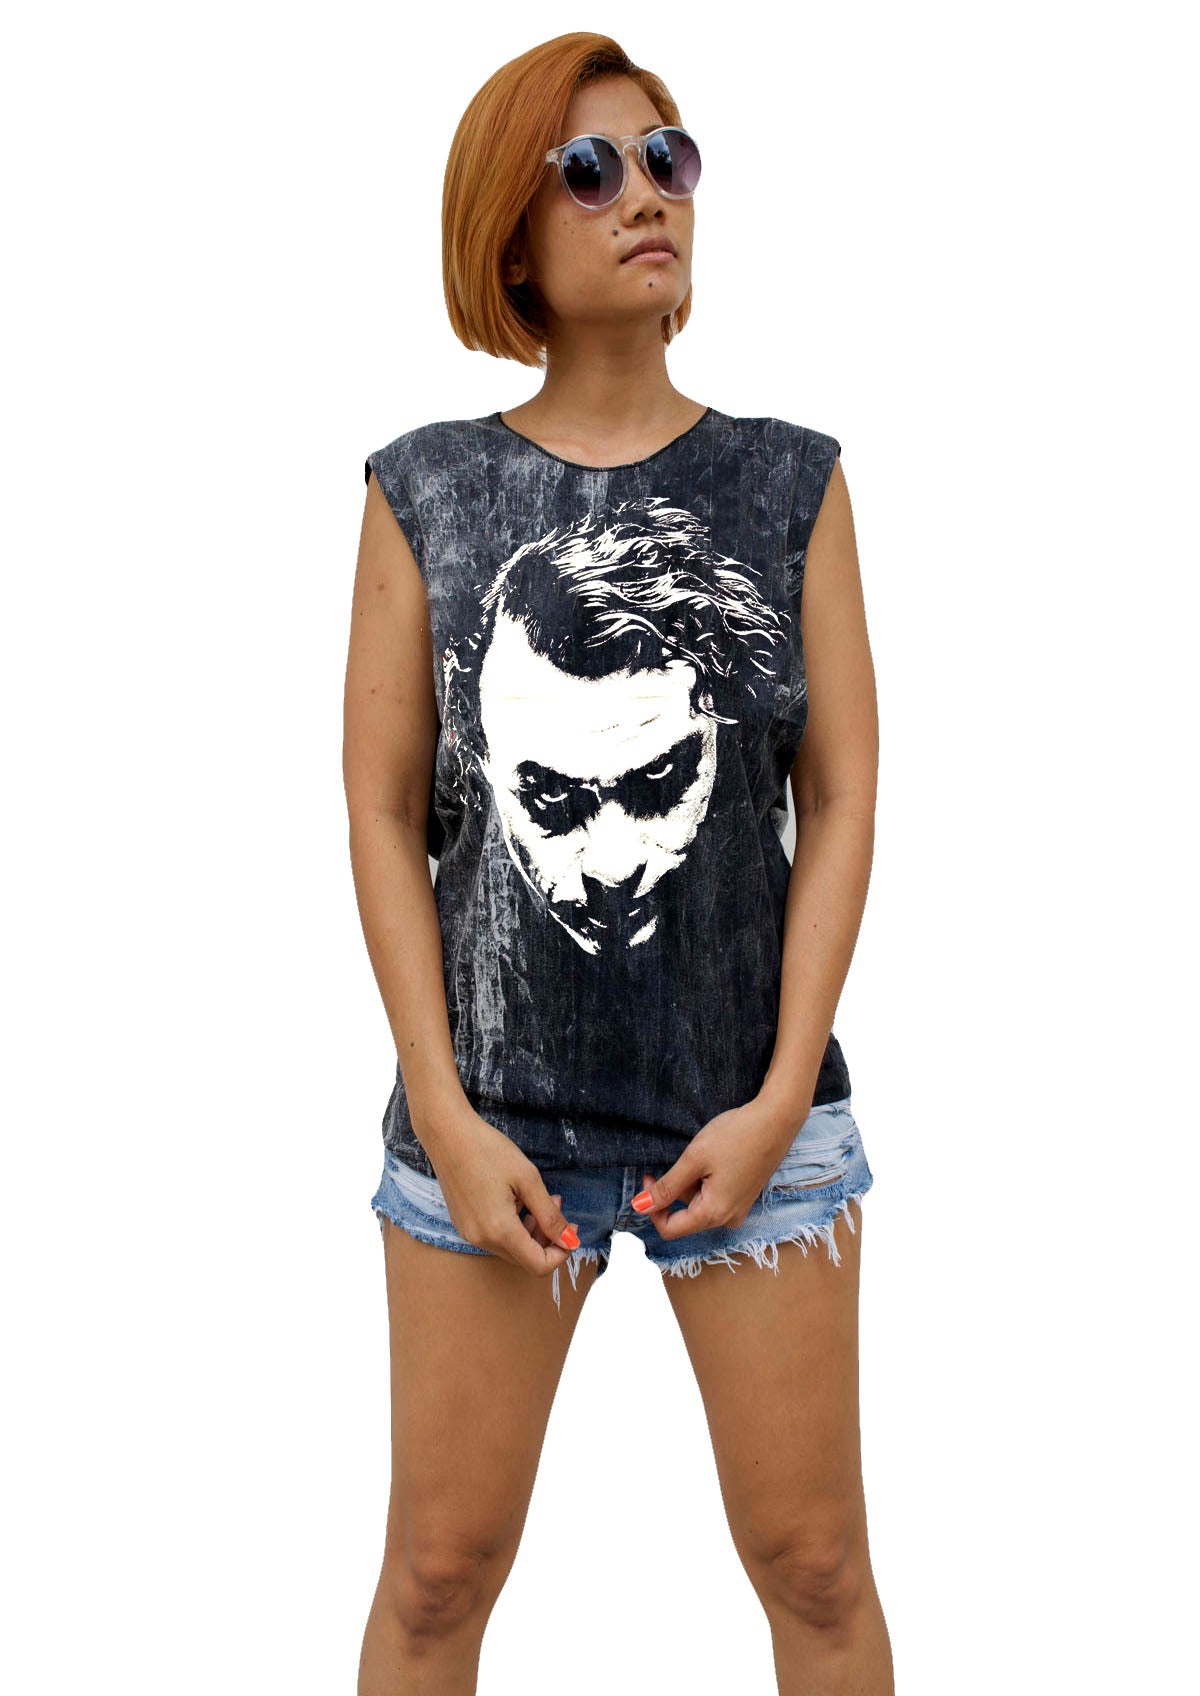 Ladies Heath Ledger The Joker Vest Tank-Top Singlet Sleeveless T-Shirt